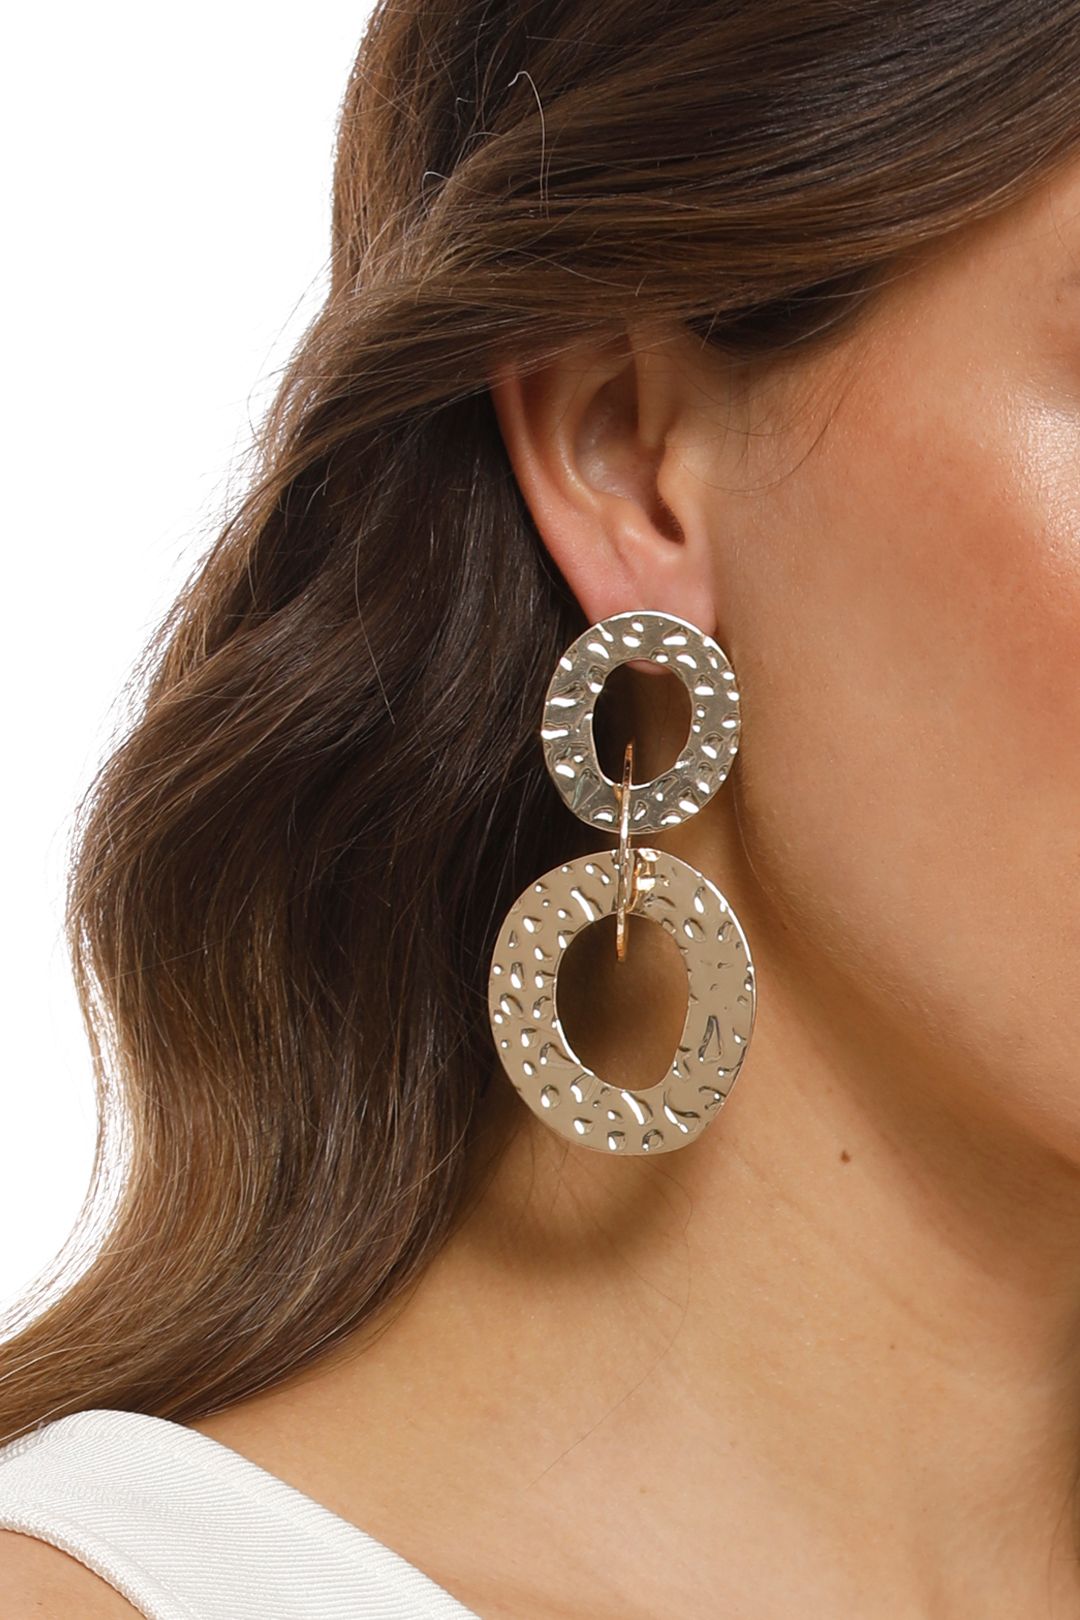 Adorne - Beaten Rings Link Earrings - Gold - Product